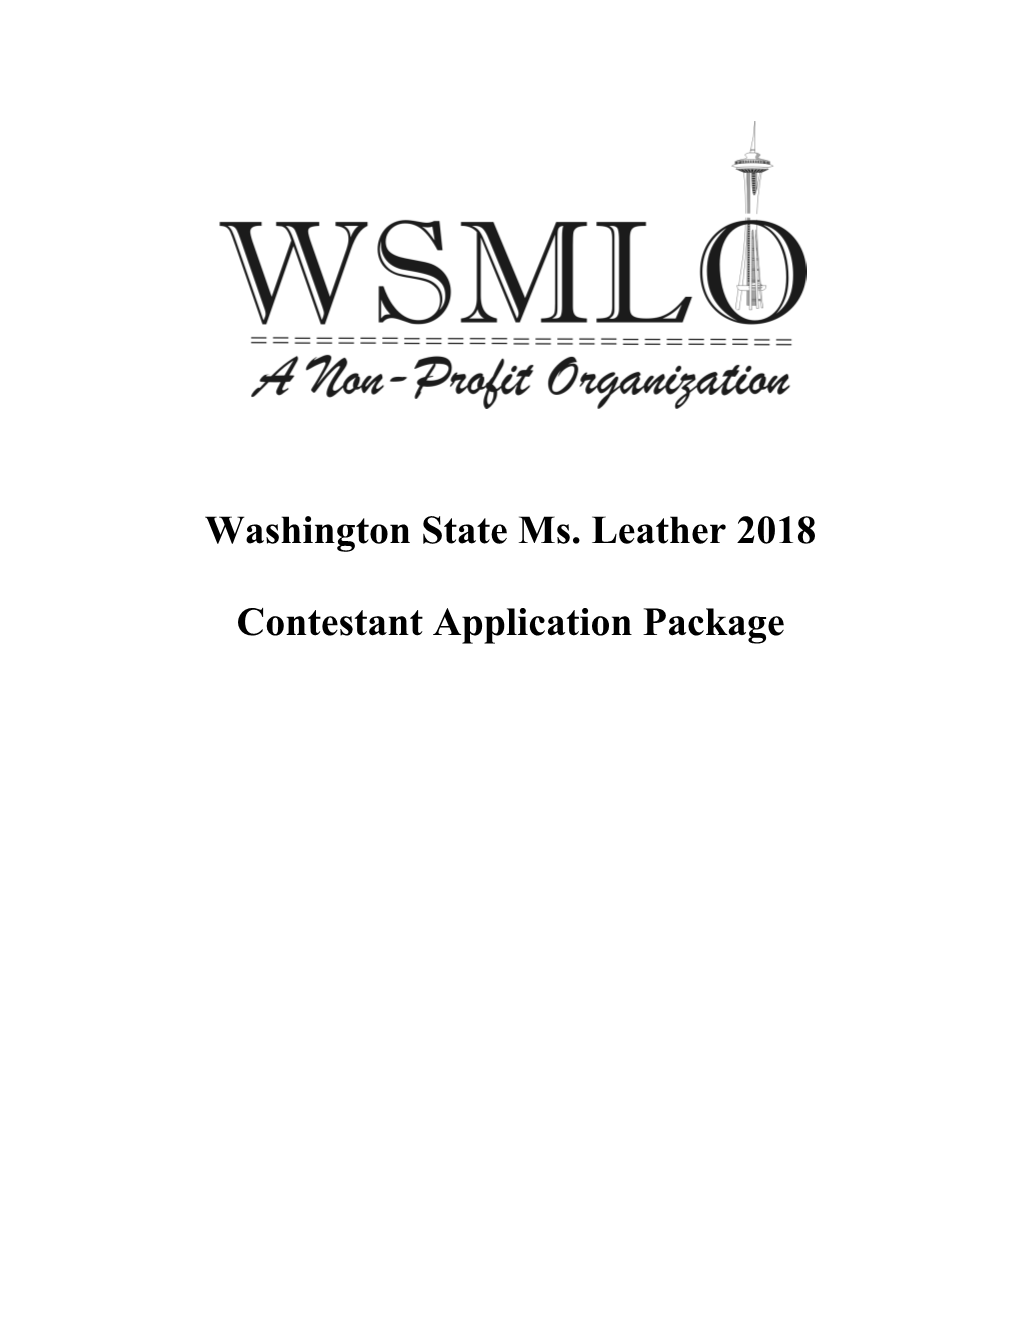 Washington State Ms. Leather 2018